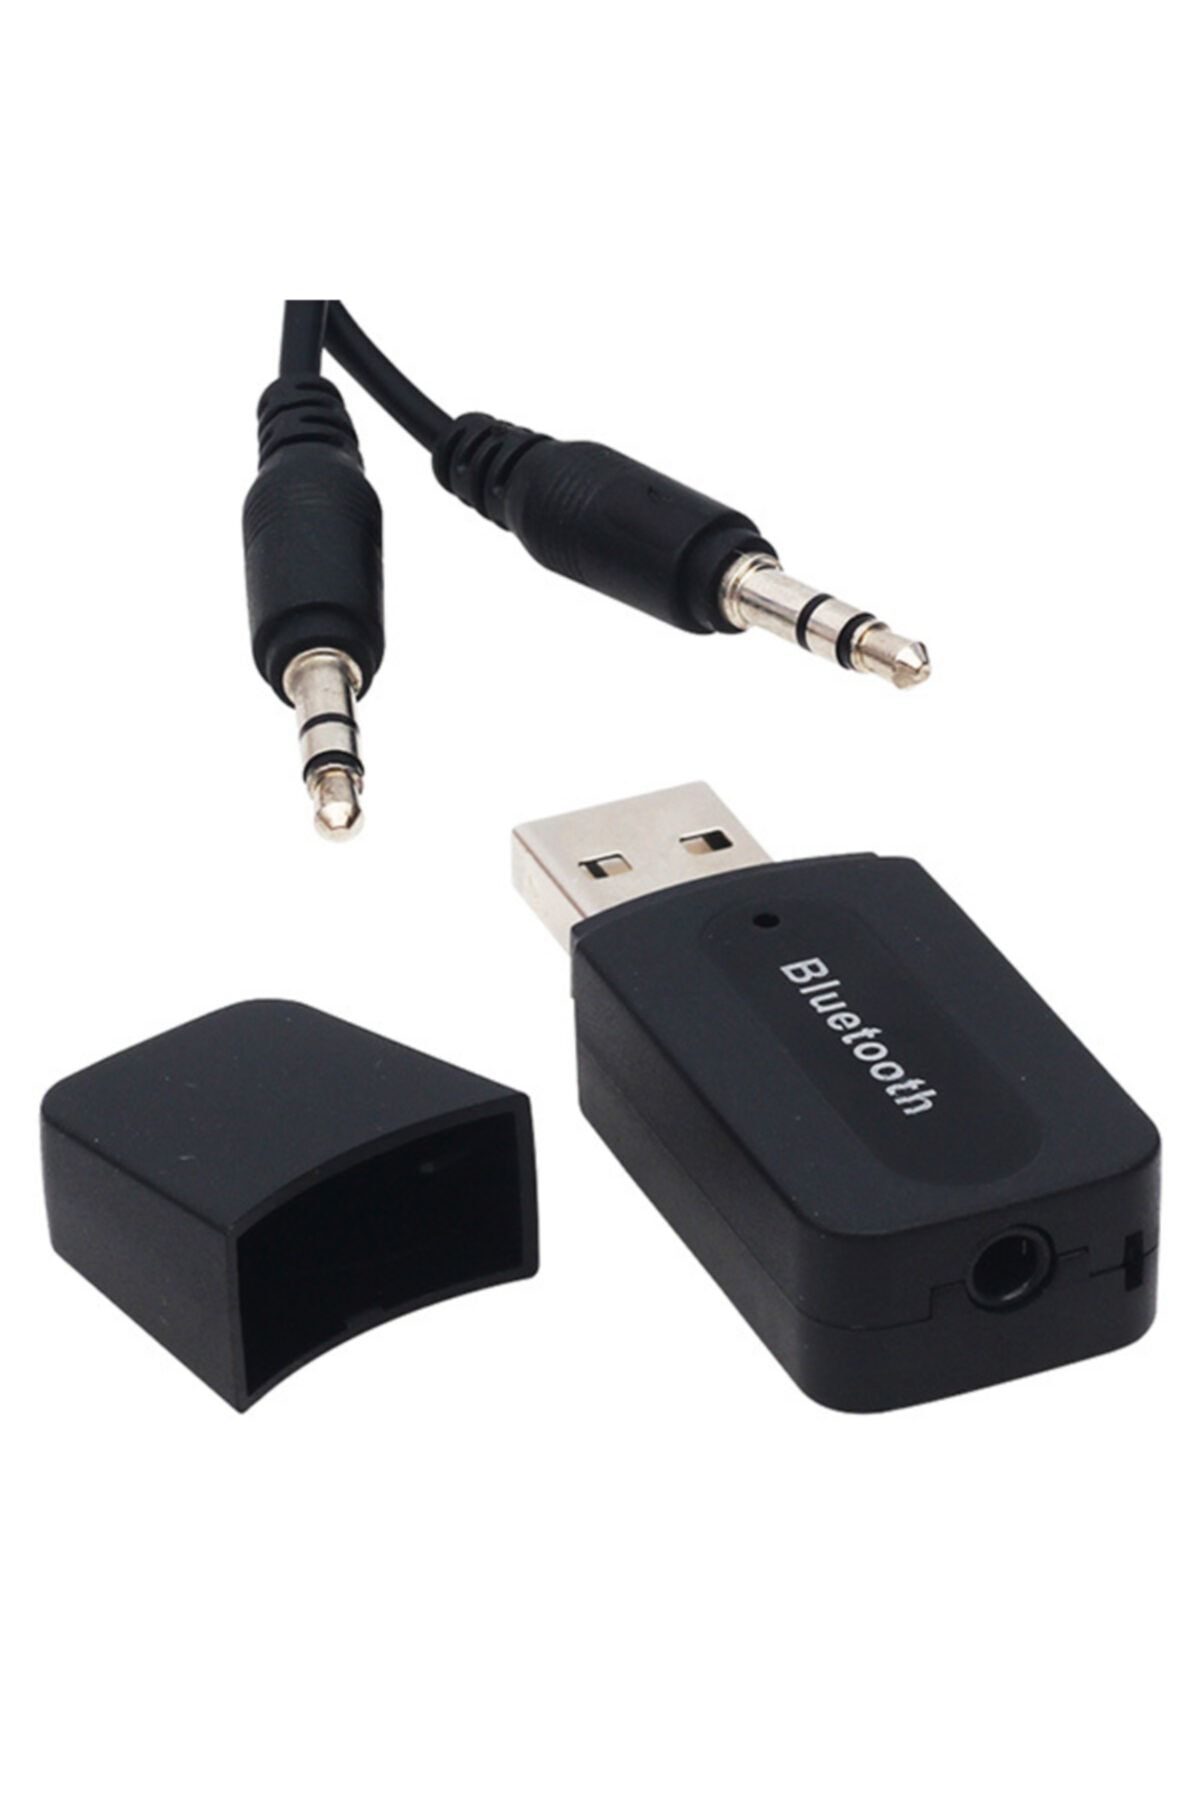 Genel Markalar POWERMASTER PM-15152 3.5 JACK USB TO BLUETOOTH AUX MUSIC RECEIVER(ÇEVİRİCİ)